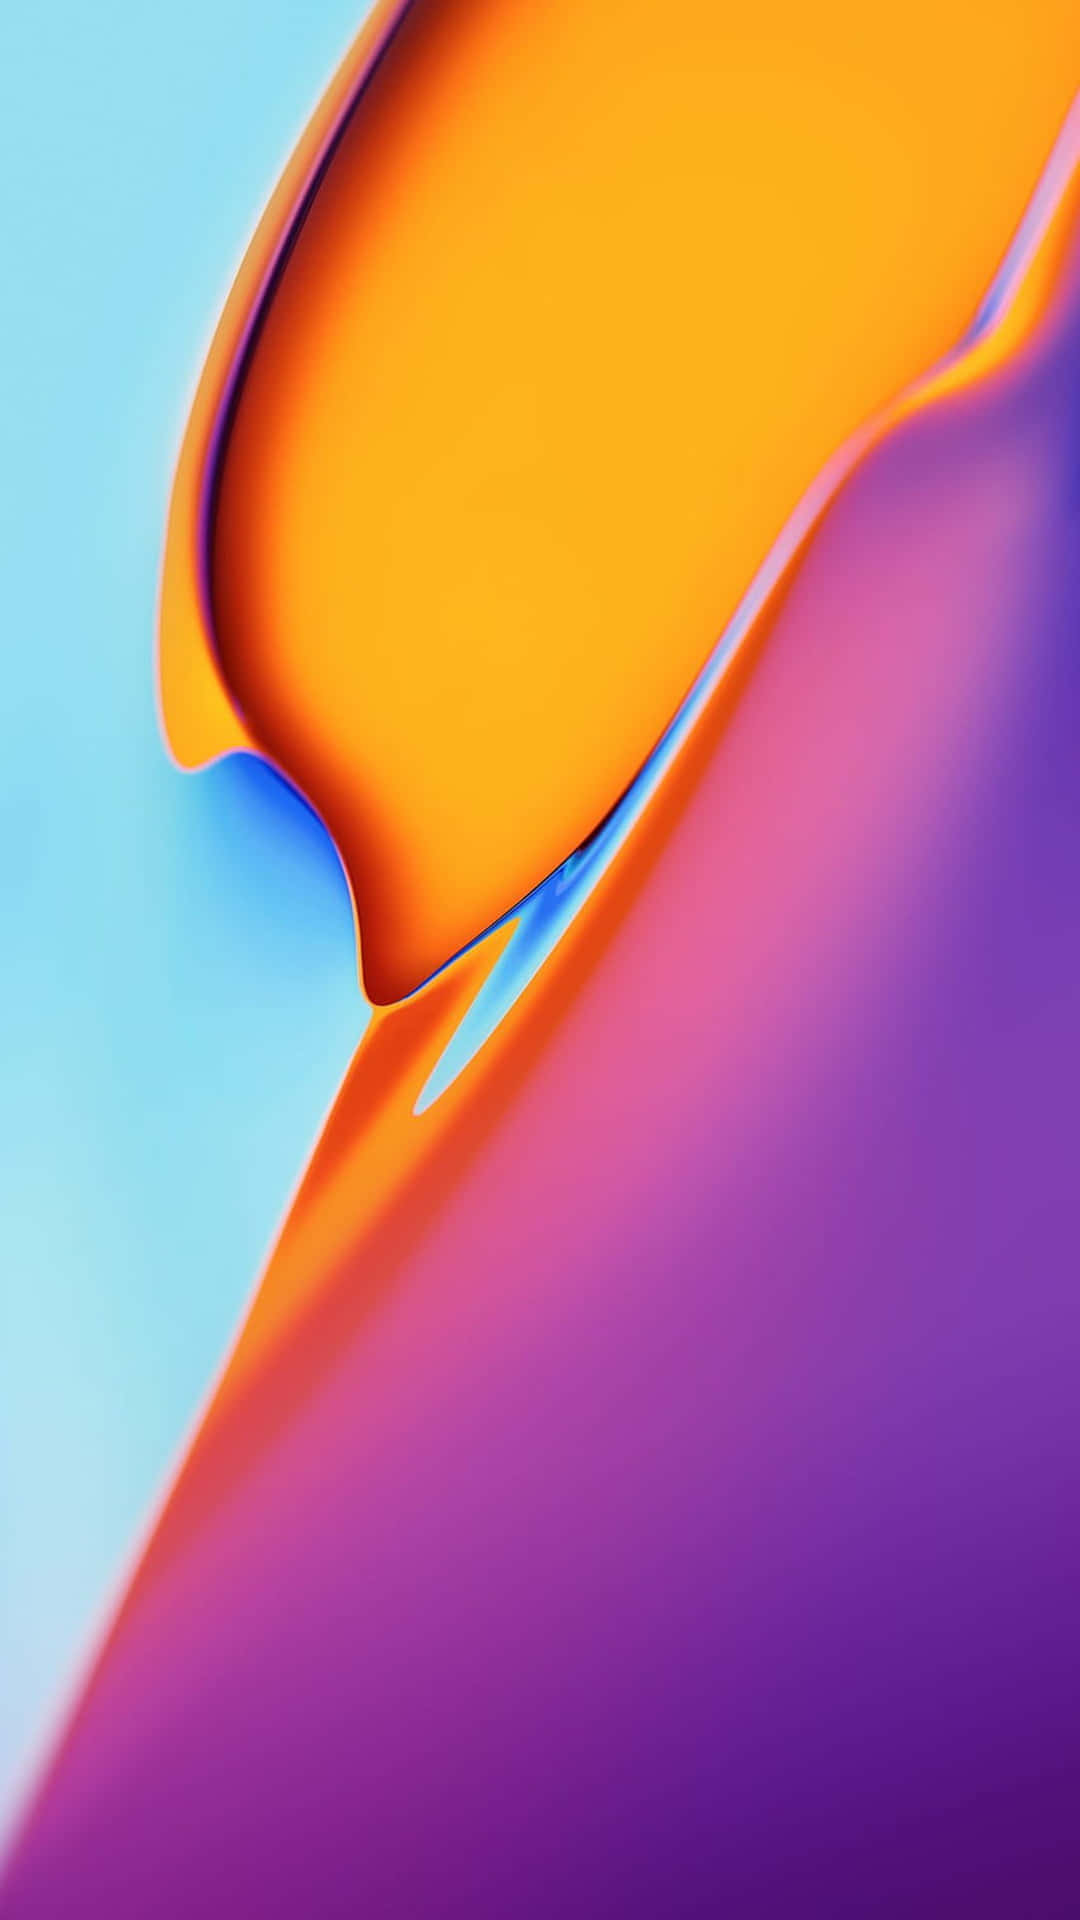 Vibrant colors splashing across a QLED display Wallpaper